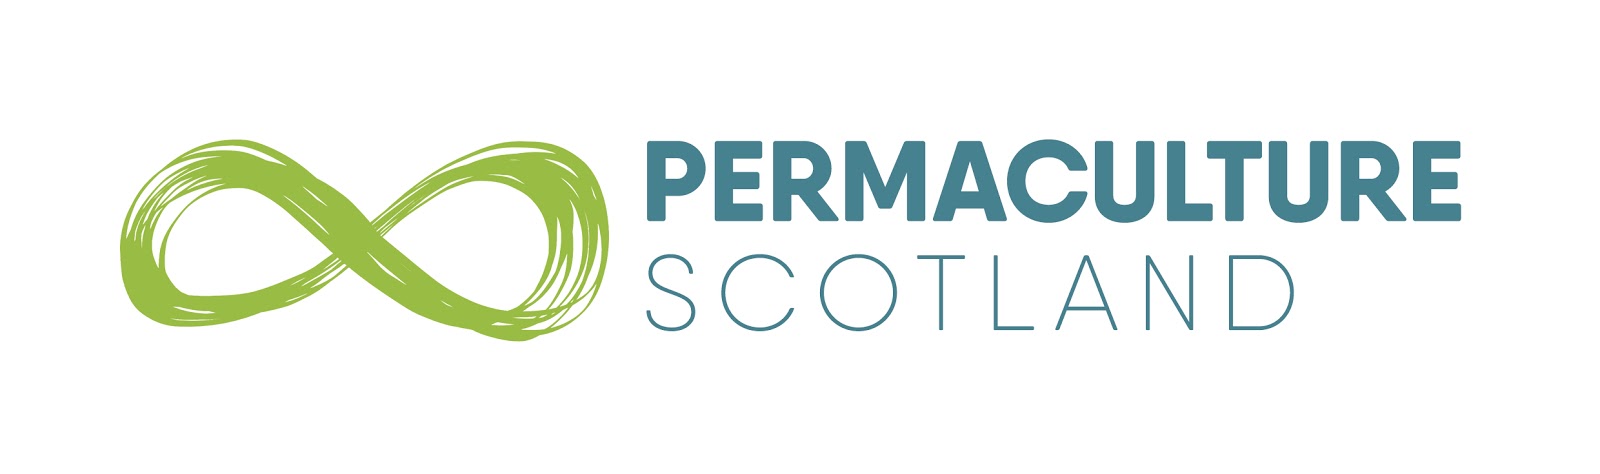 Permaculture Scotland